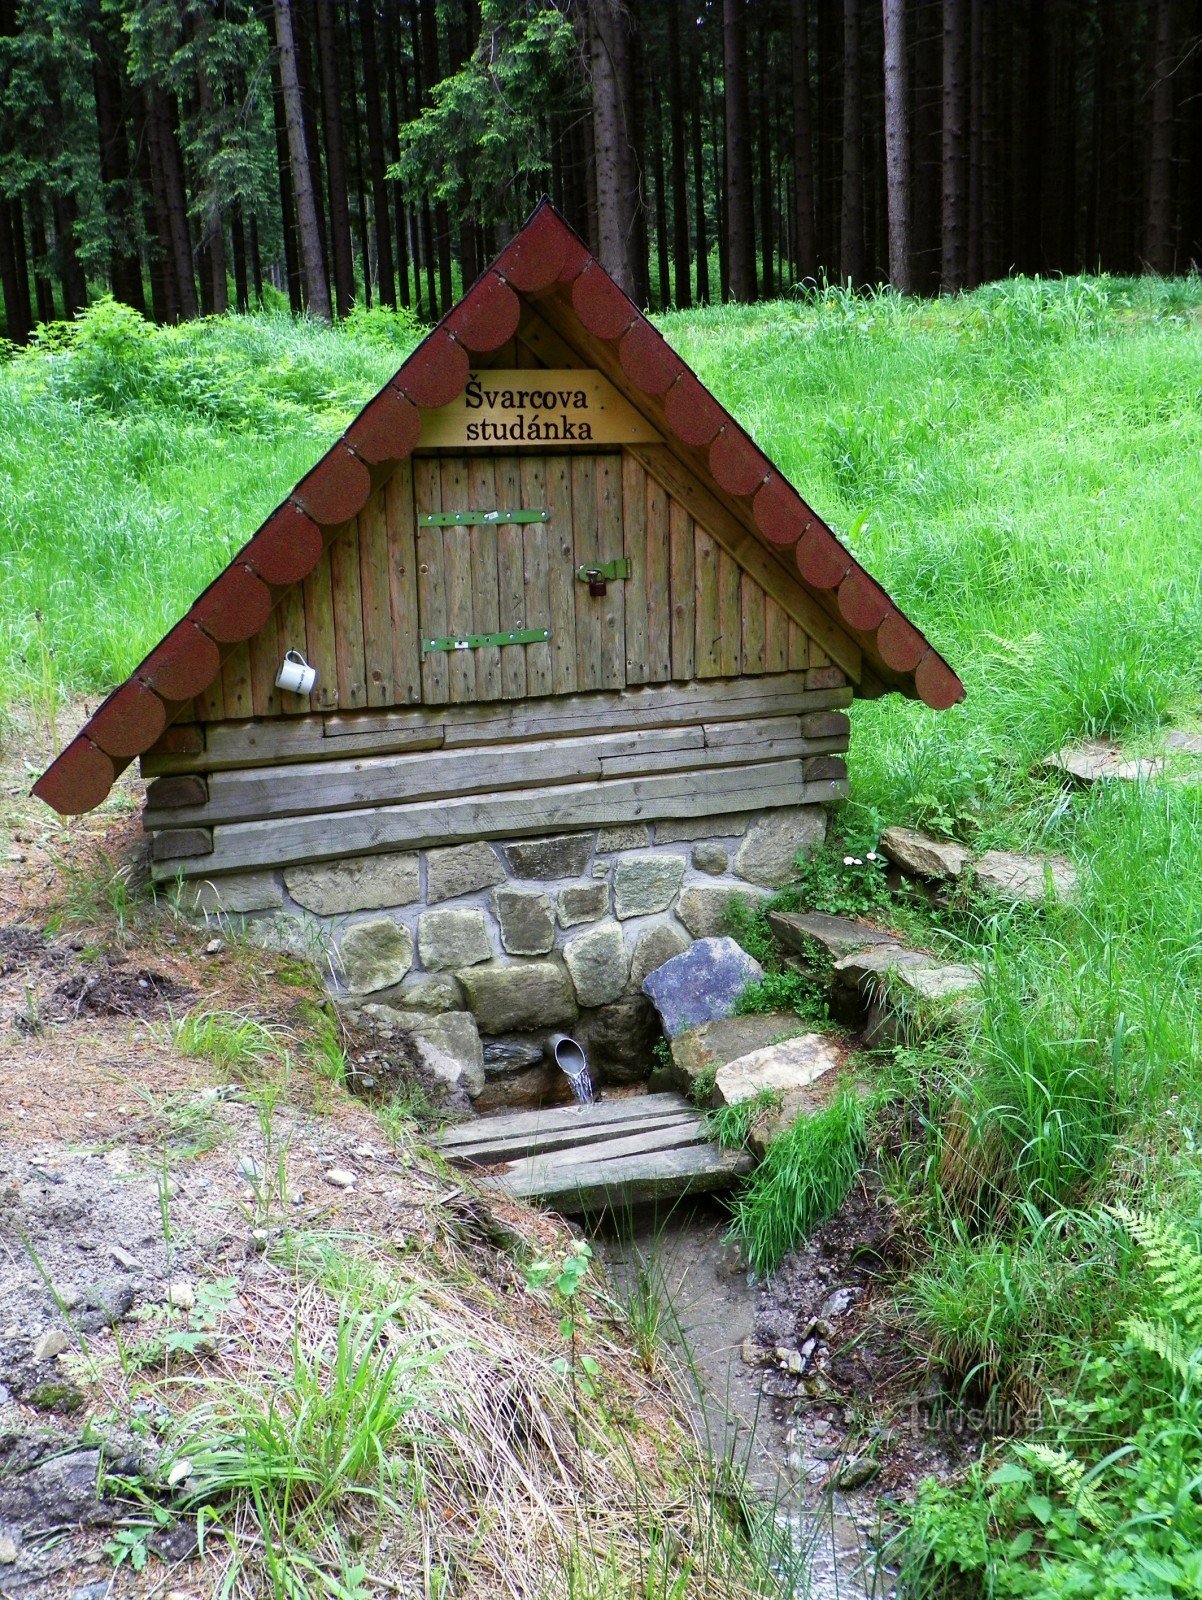 Schvark's well